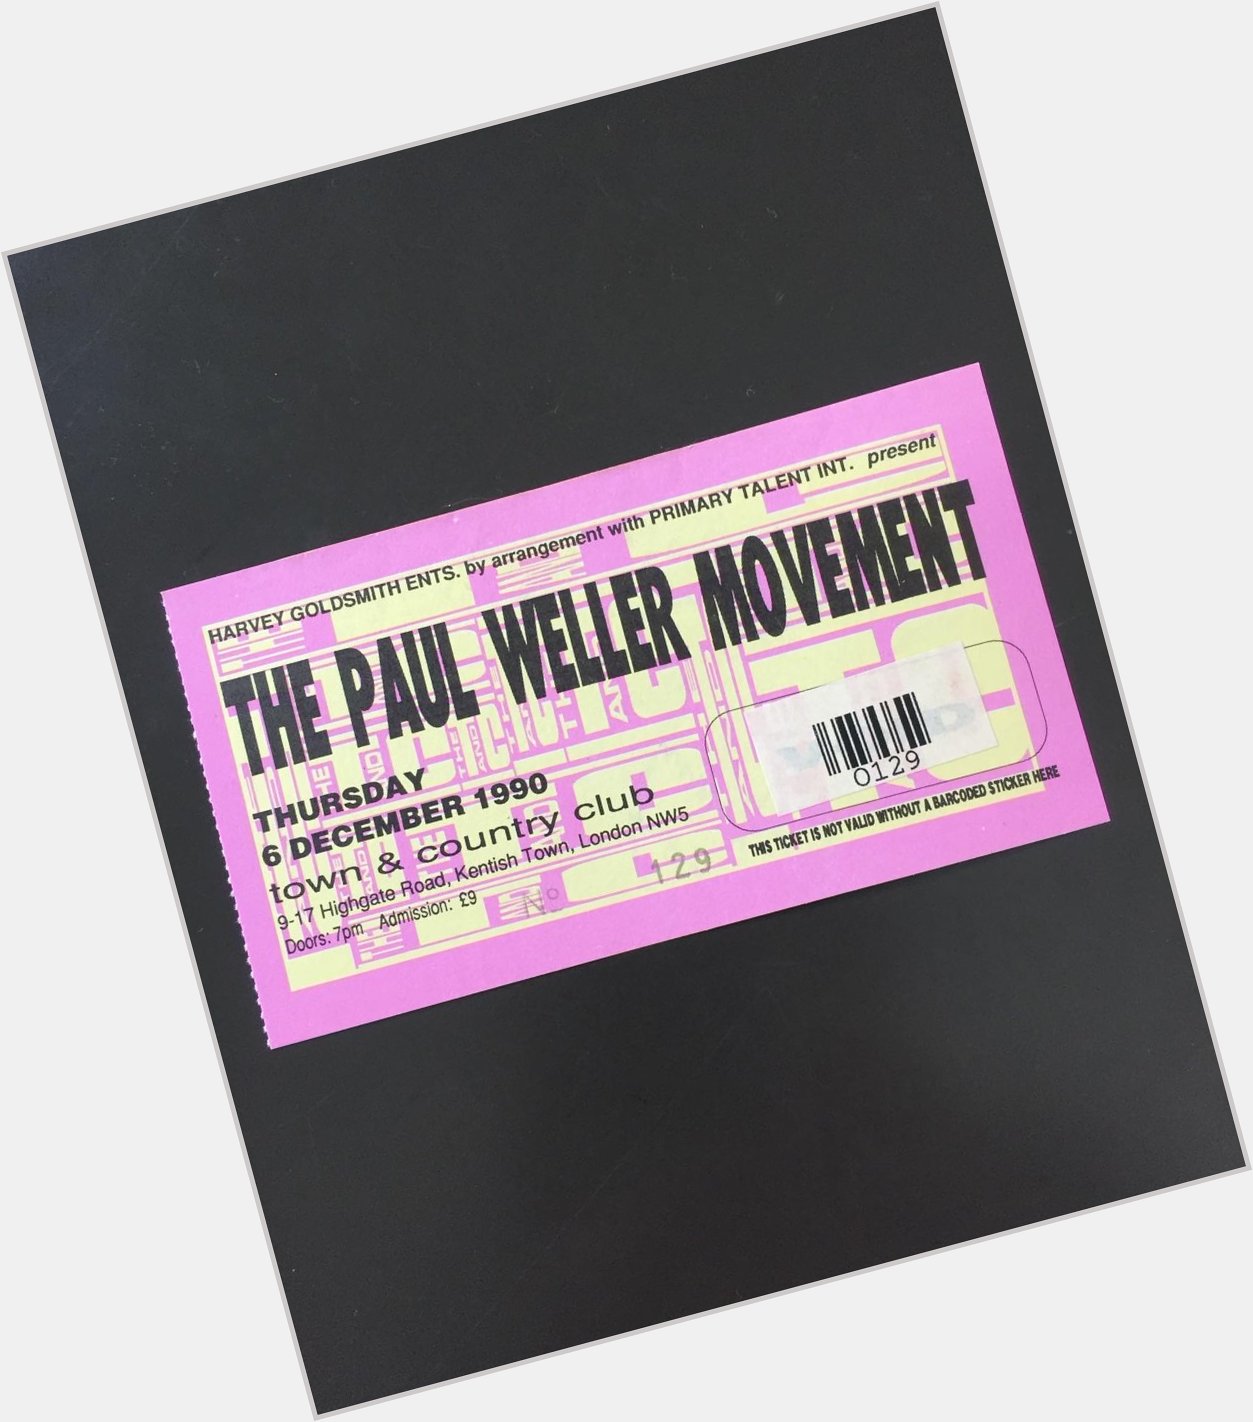 Happy birthday
PAUL WELLER 